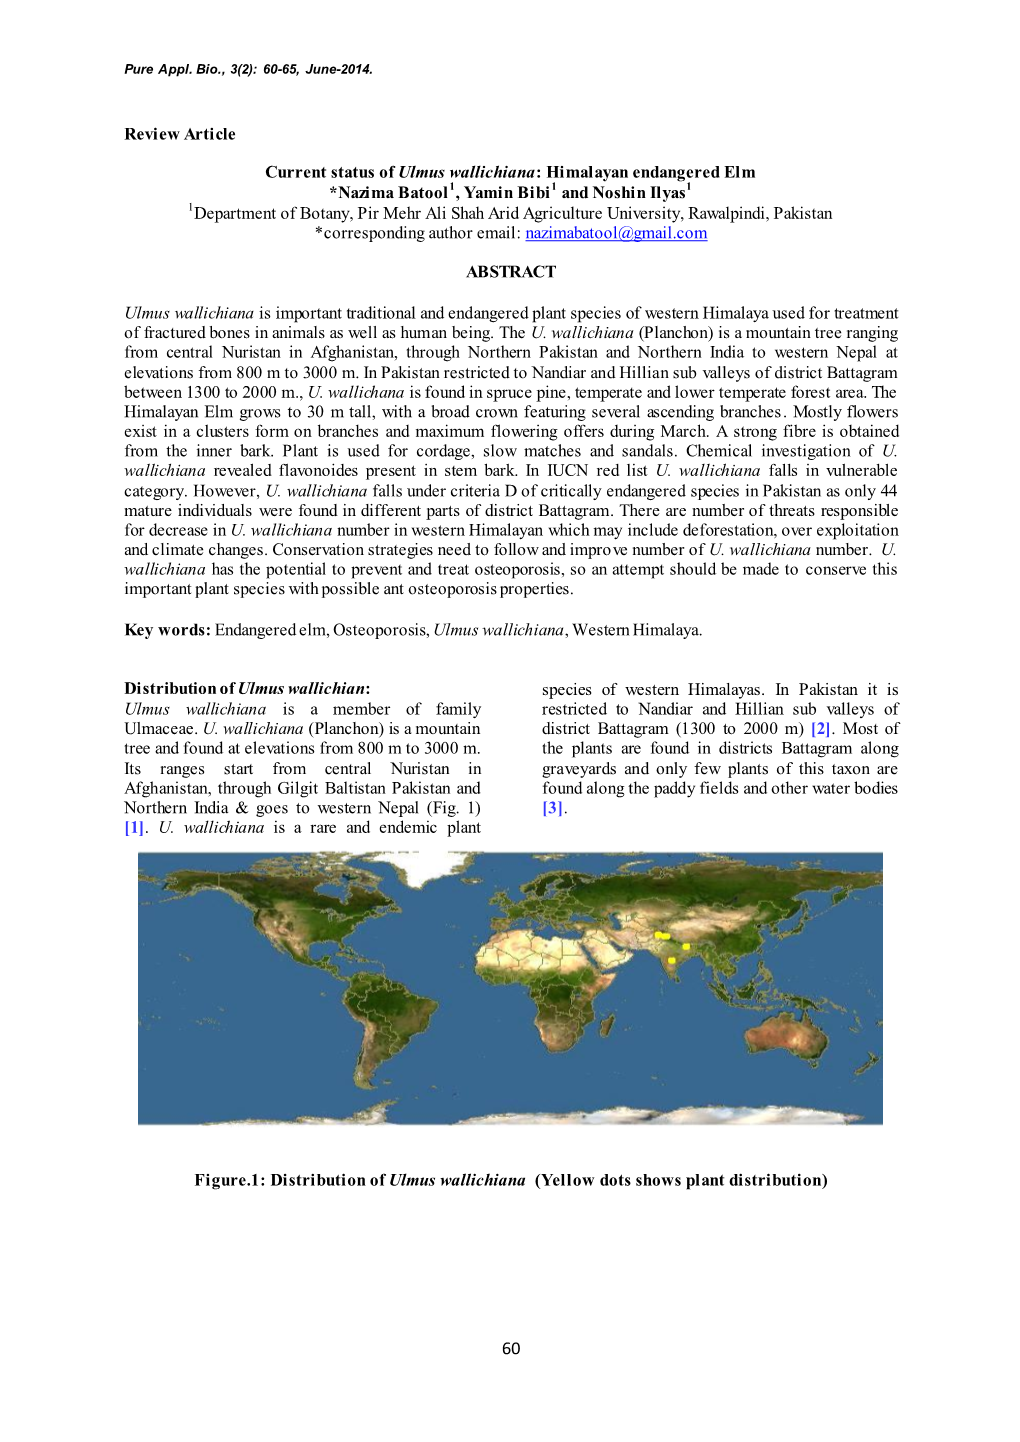 Review Article Current Status of Ulmus Wallichiana: Himalayan Endangered Elm *Nazima Batool1, Yamin Bibi1 and Noshin Ilyas1 1Dep